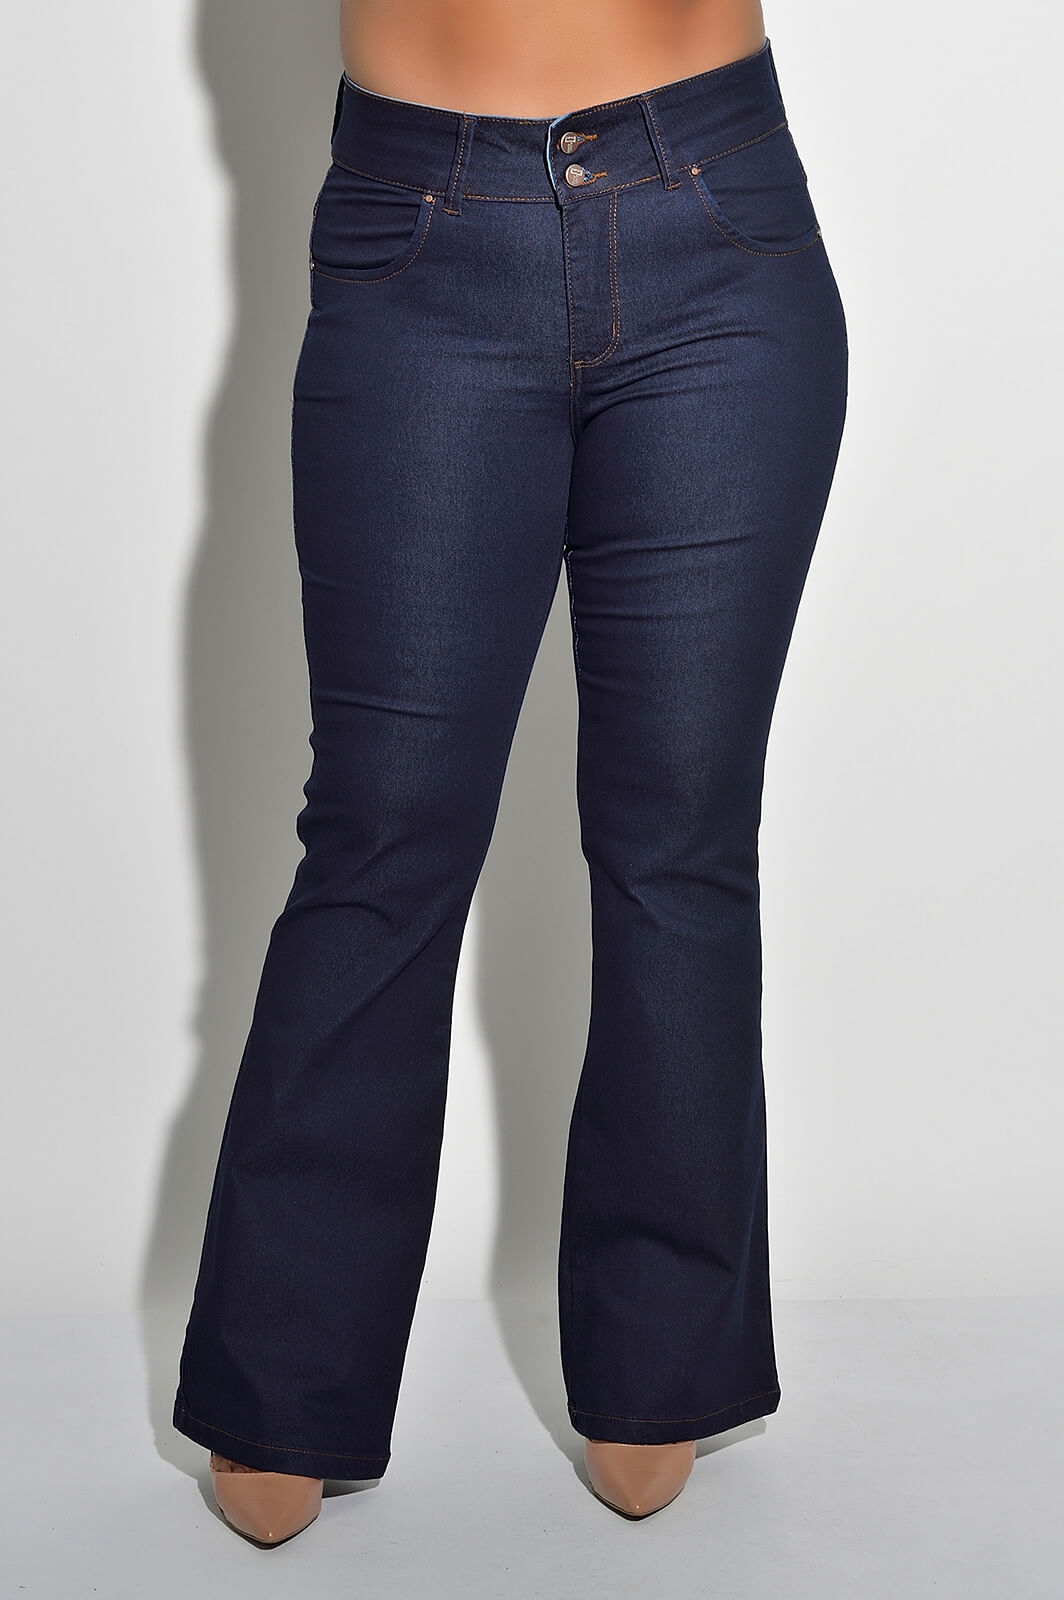 Calça Flare Plus Size Jeans Bruna - Mania Brasil Moda Plus Size